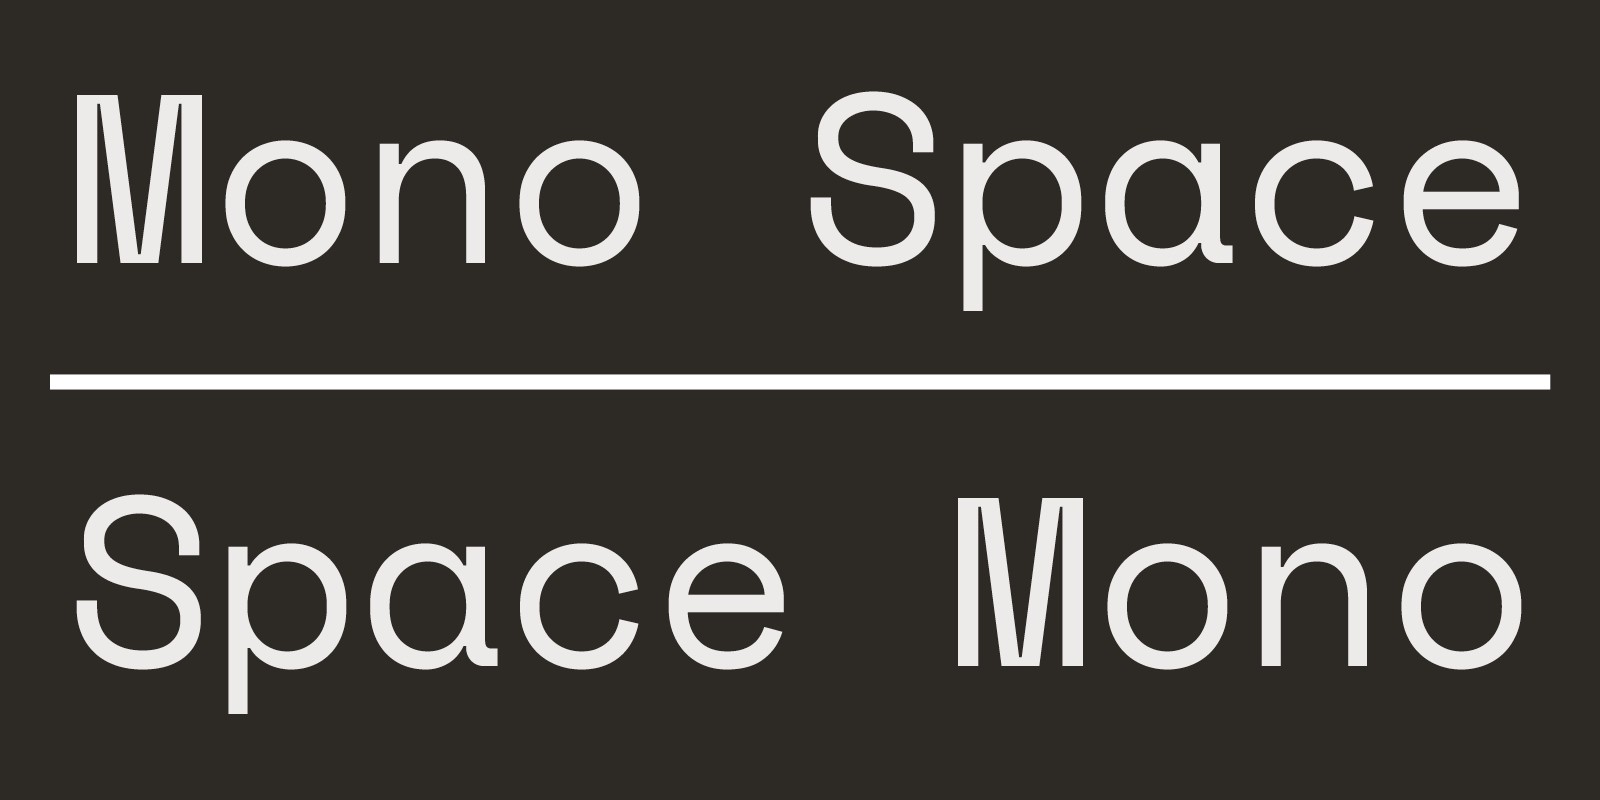 Police Space Mono